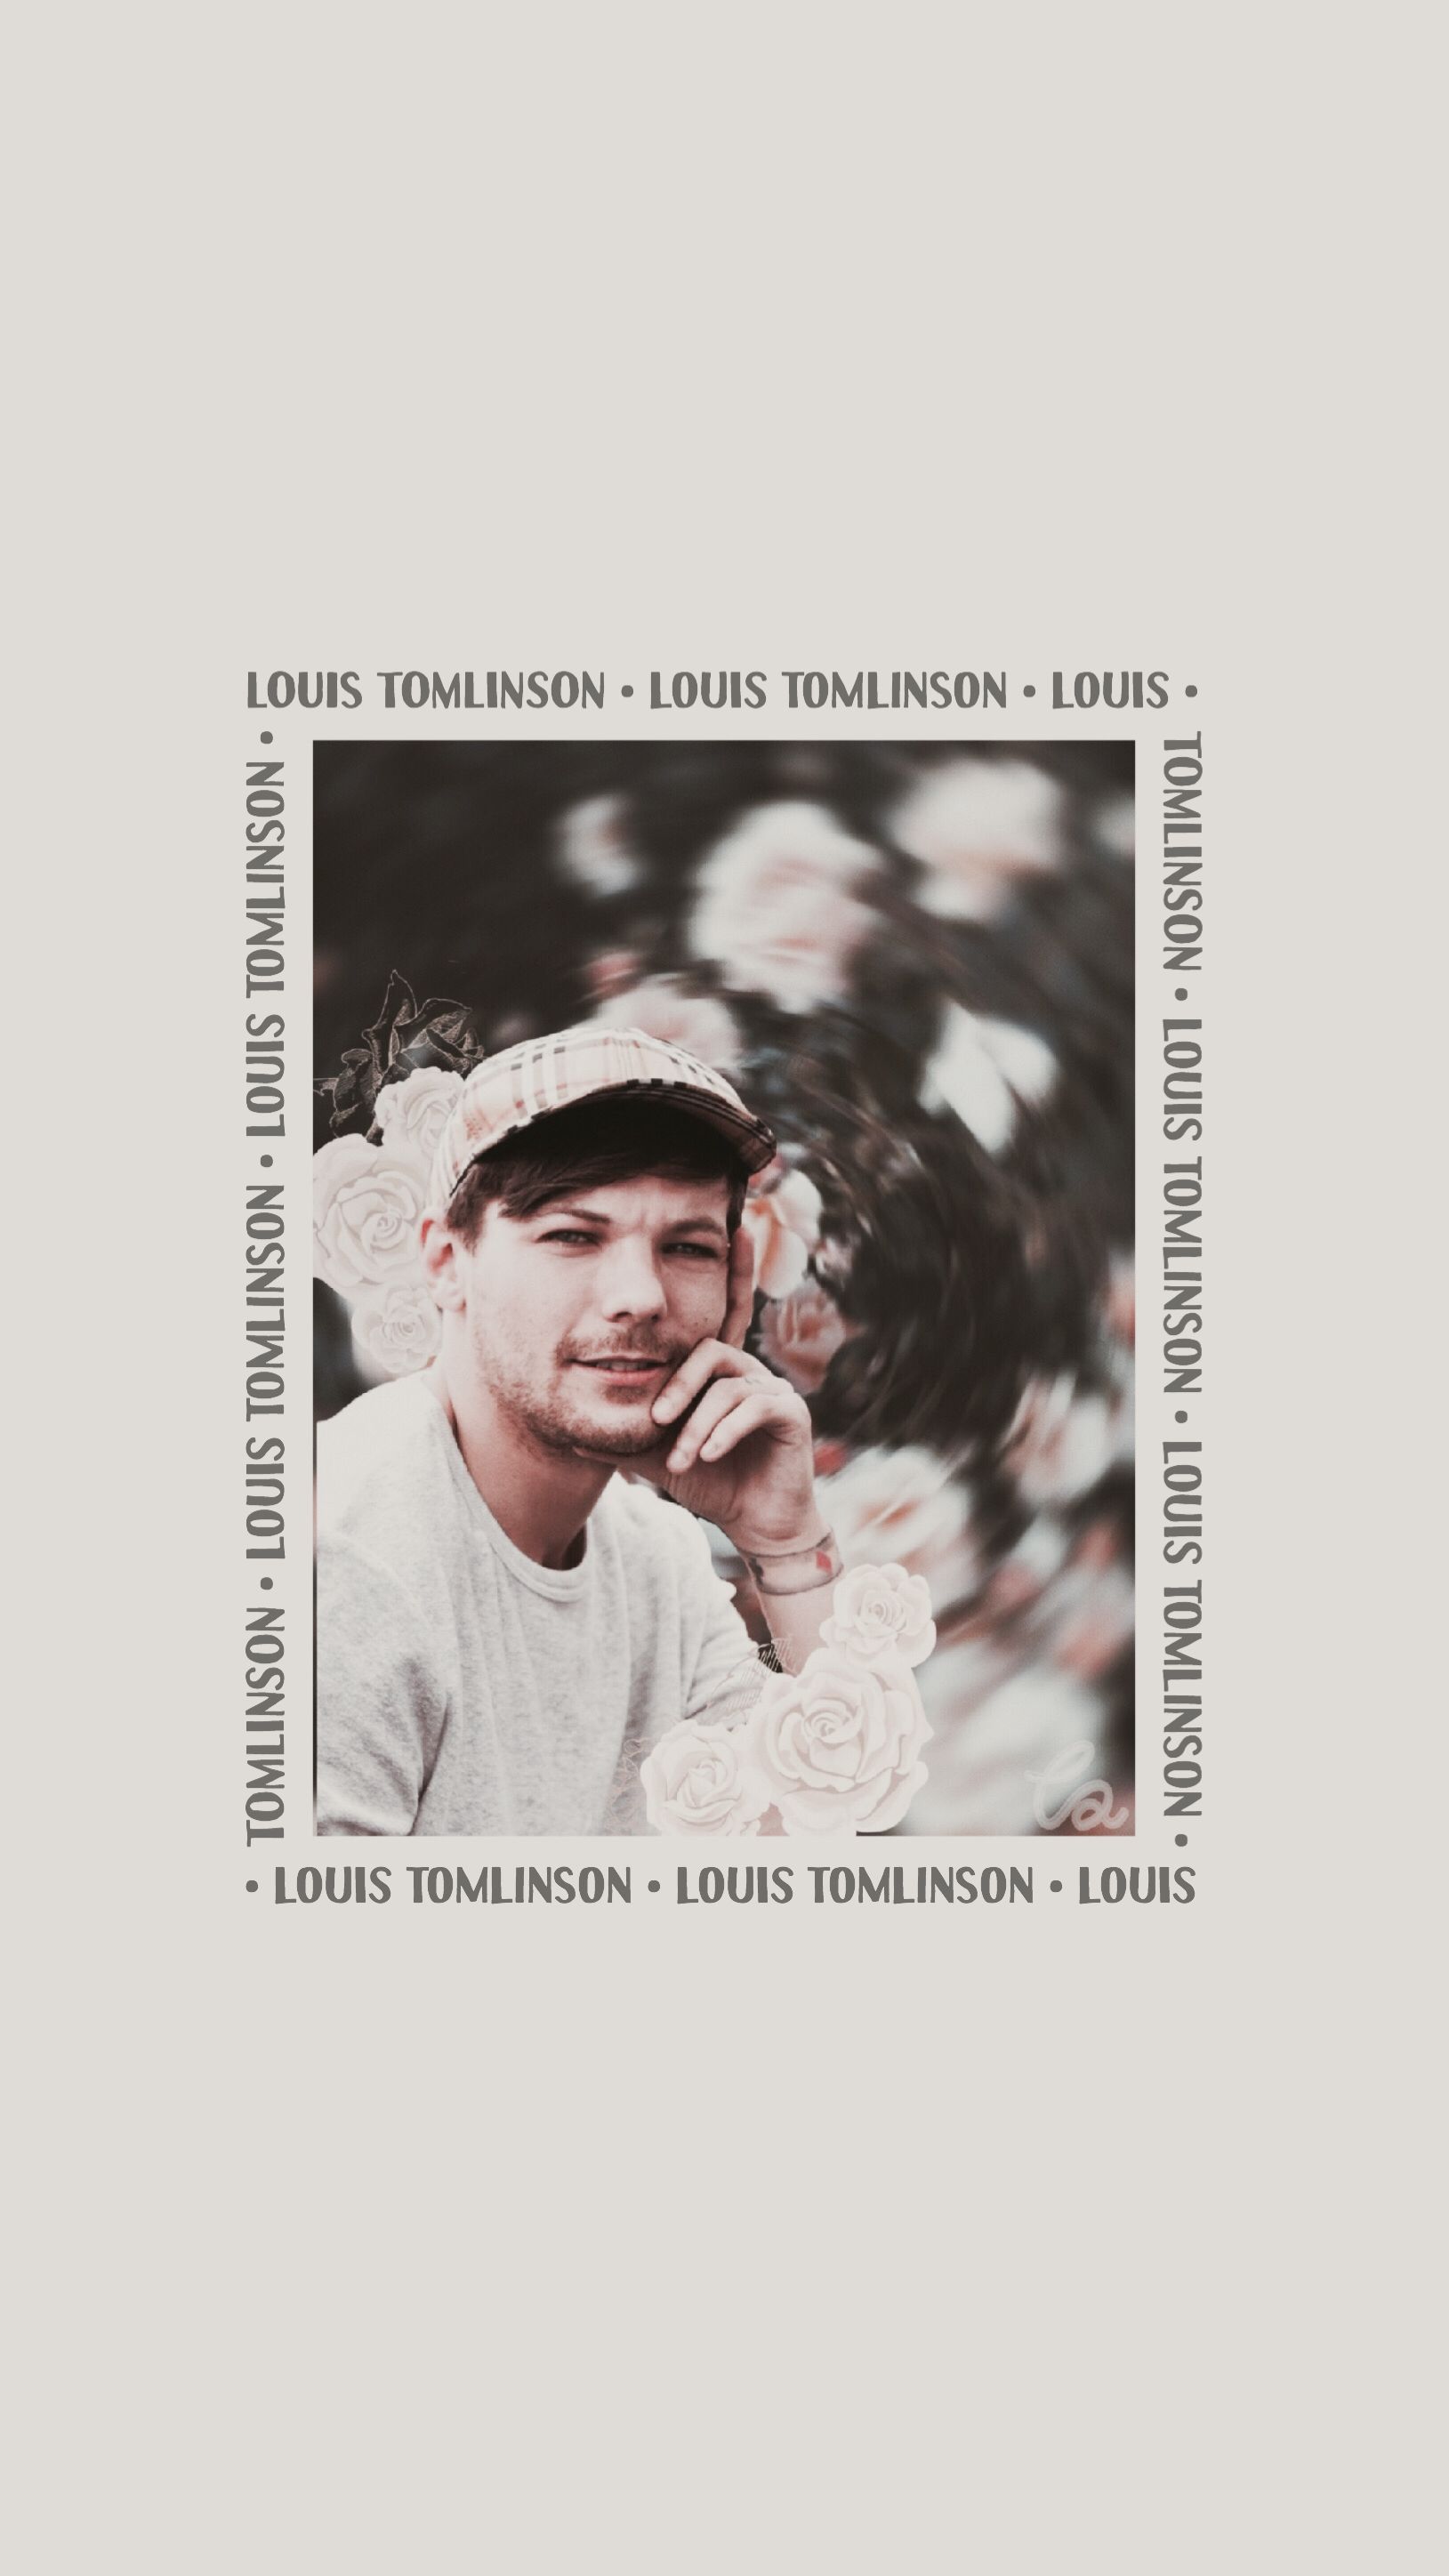 Louis Tomlinson wallpaper White aesthetic 22 August 2018. Louis tomlinson, One direction picture, One direction quotes